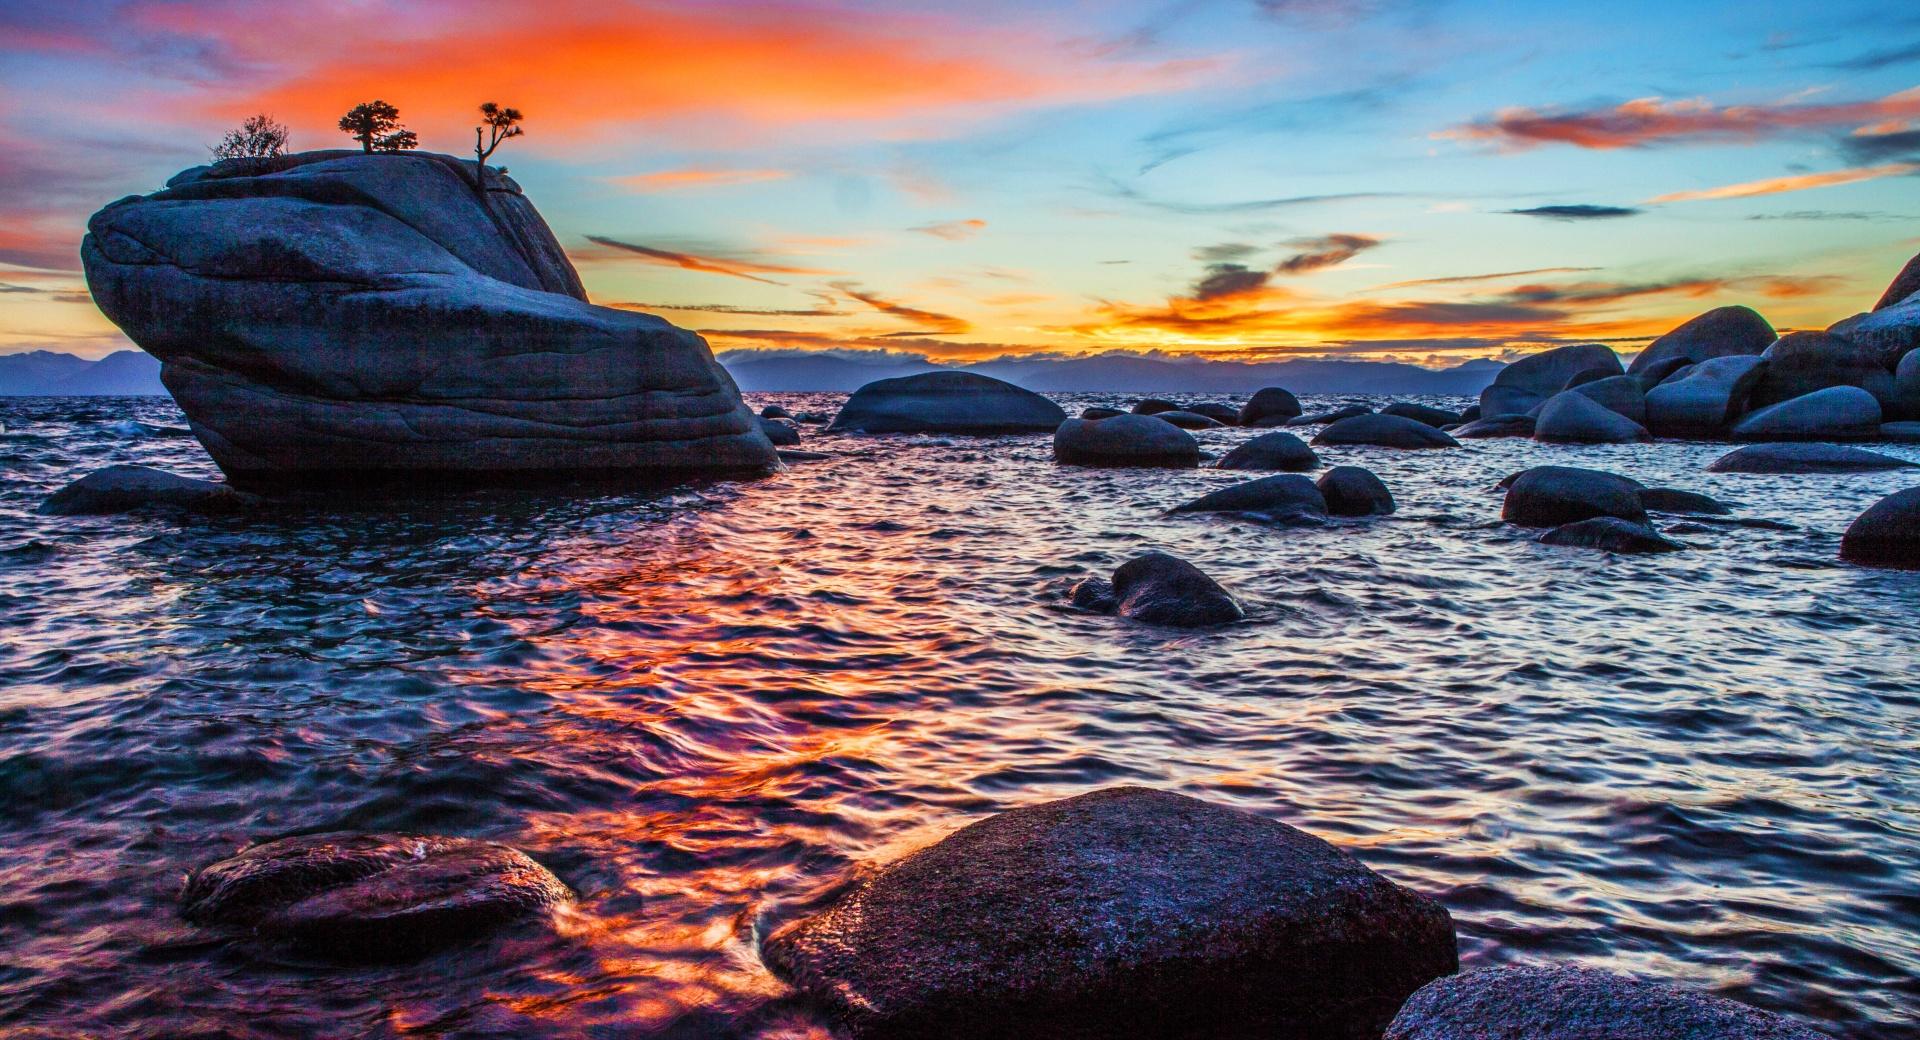 Bonsai Rock Sunset at Lake Tahoe at 1280 x 960 size wallpapers HD quality